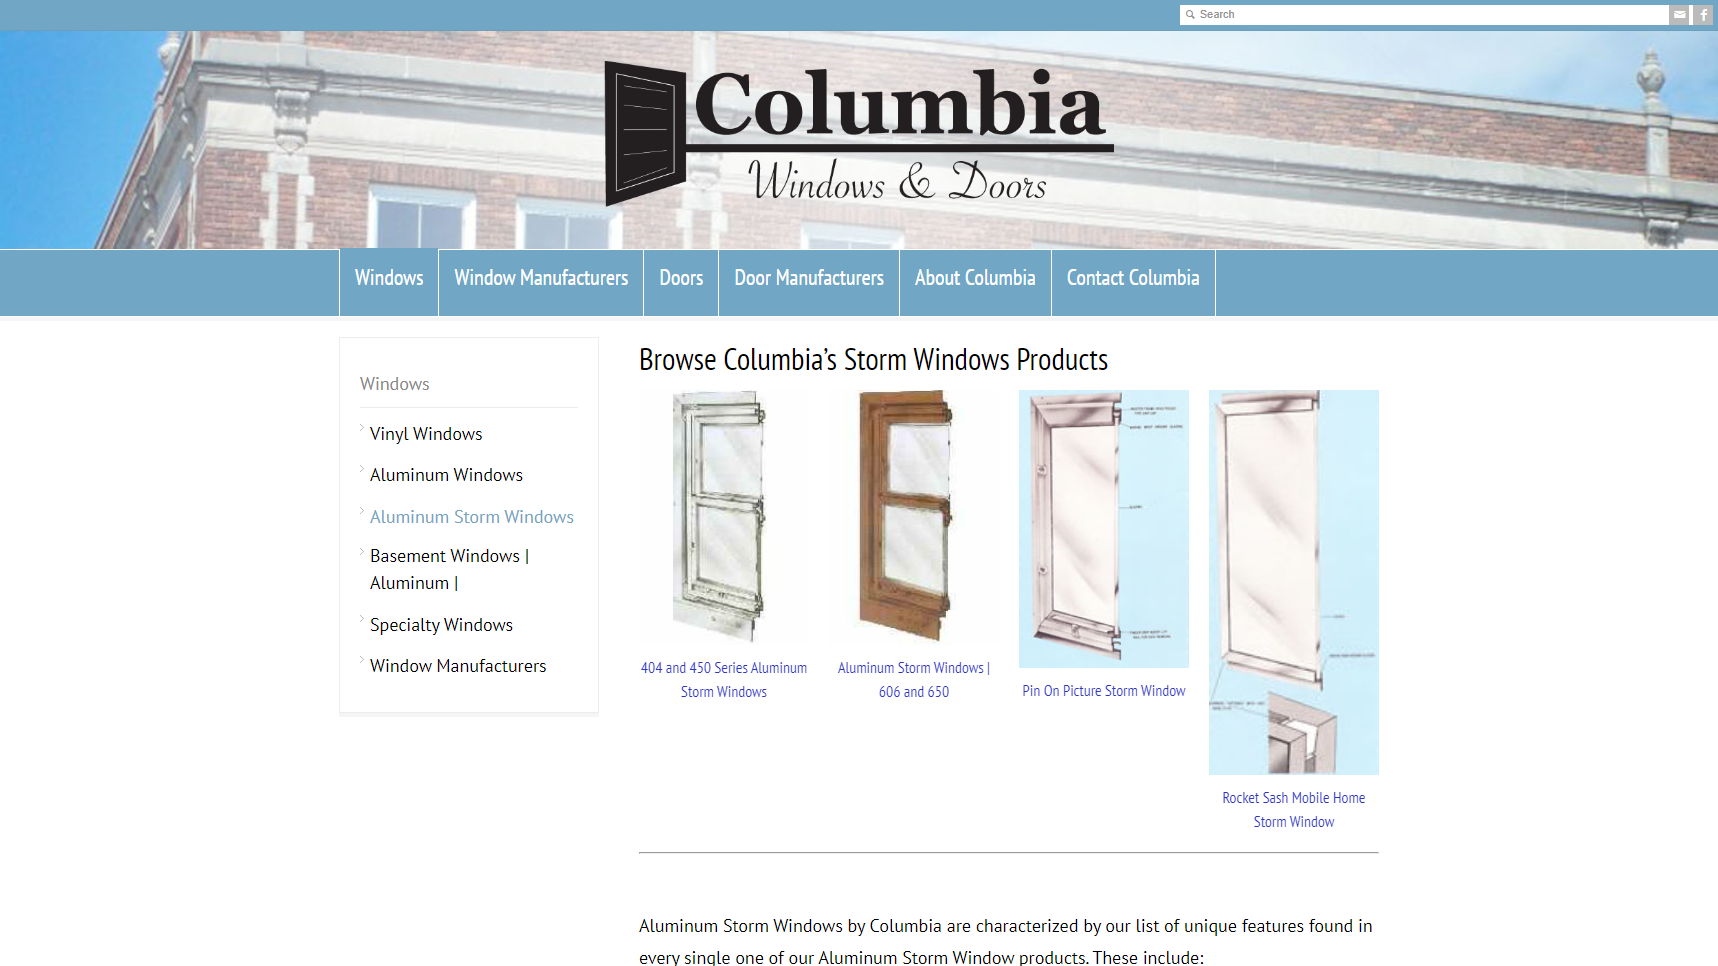 Columbia Windows & Doors - Aluminum Storm Windows Manufacturer